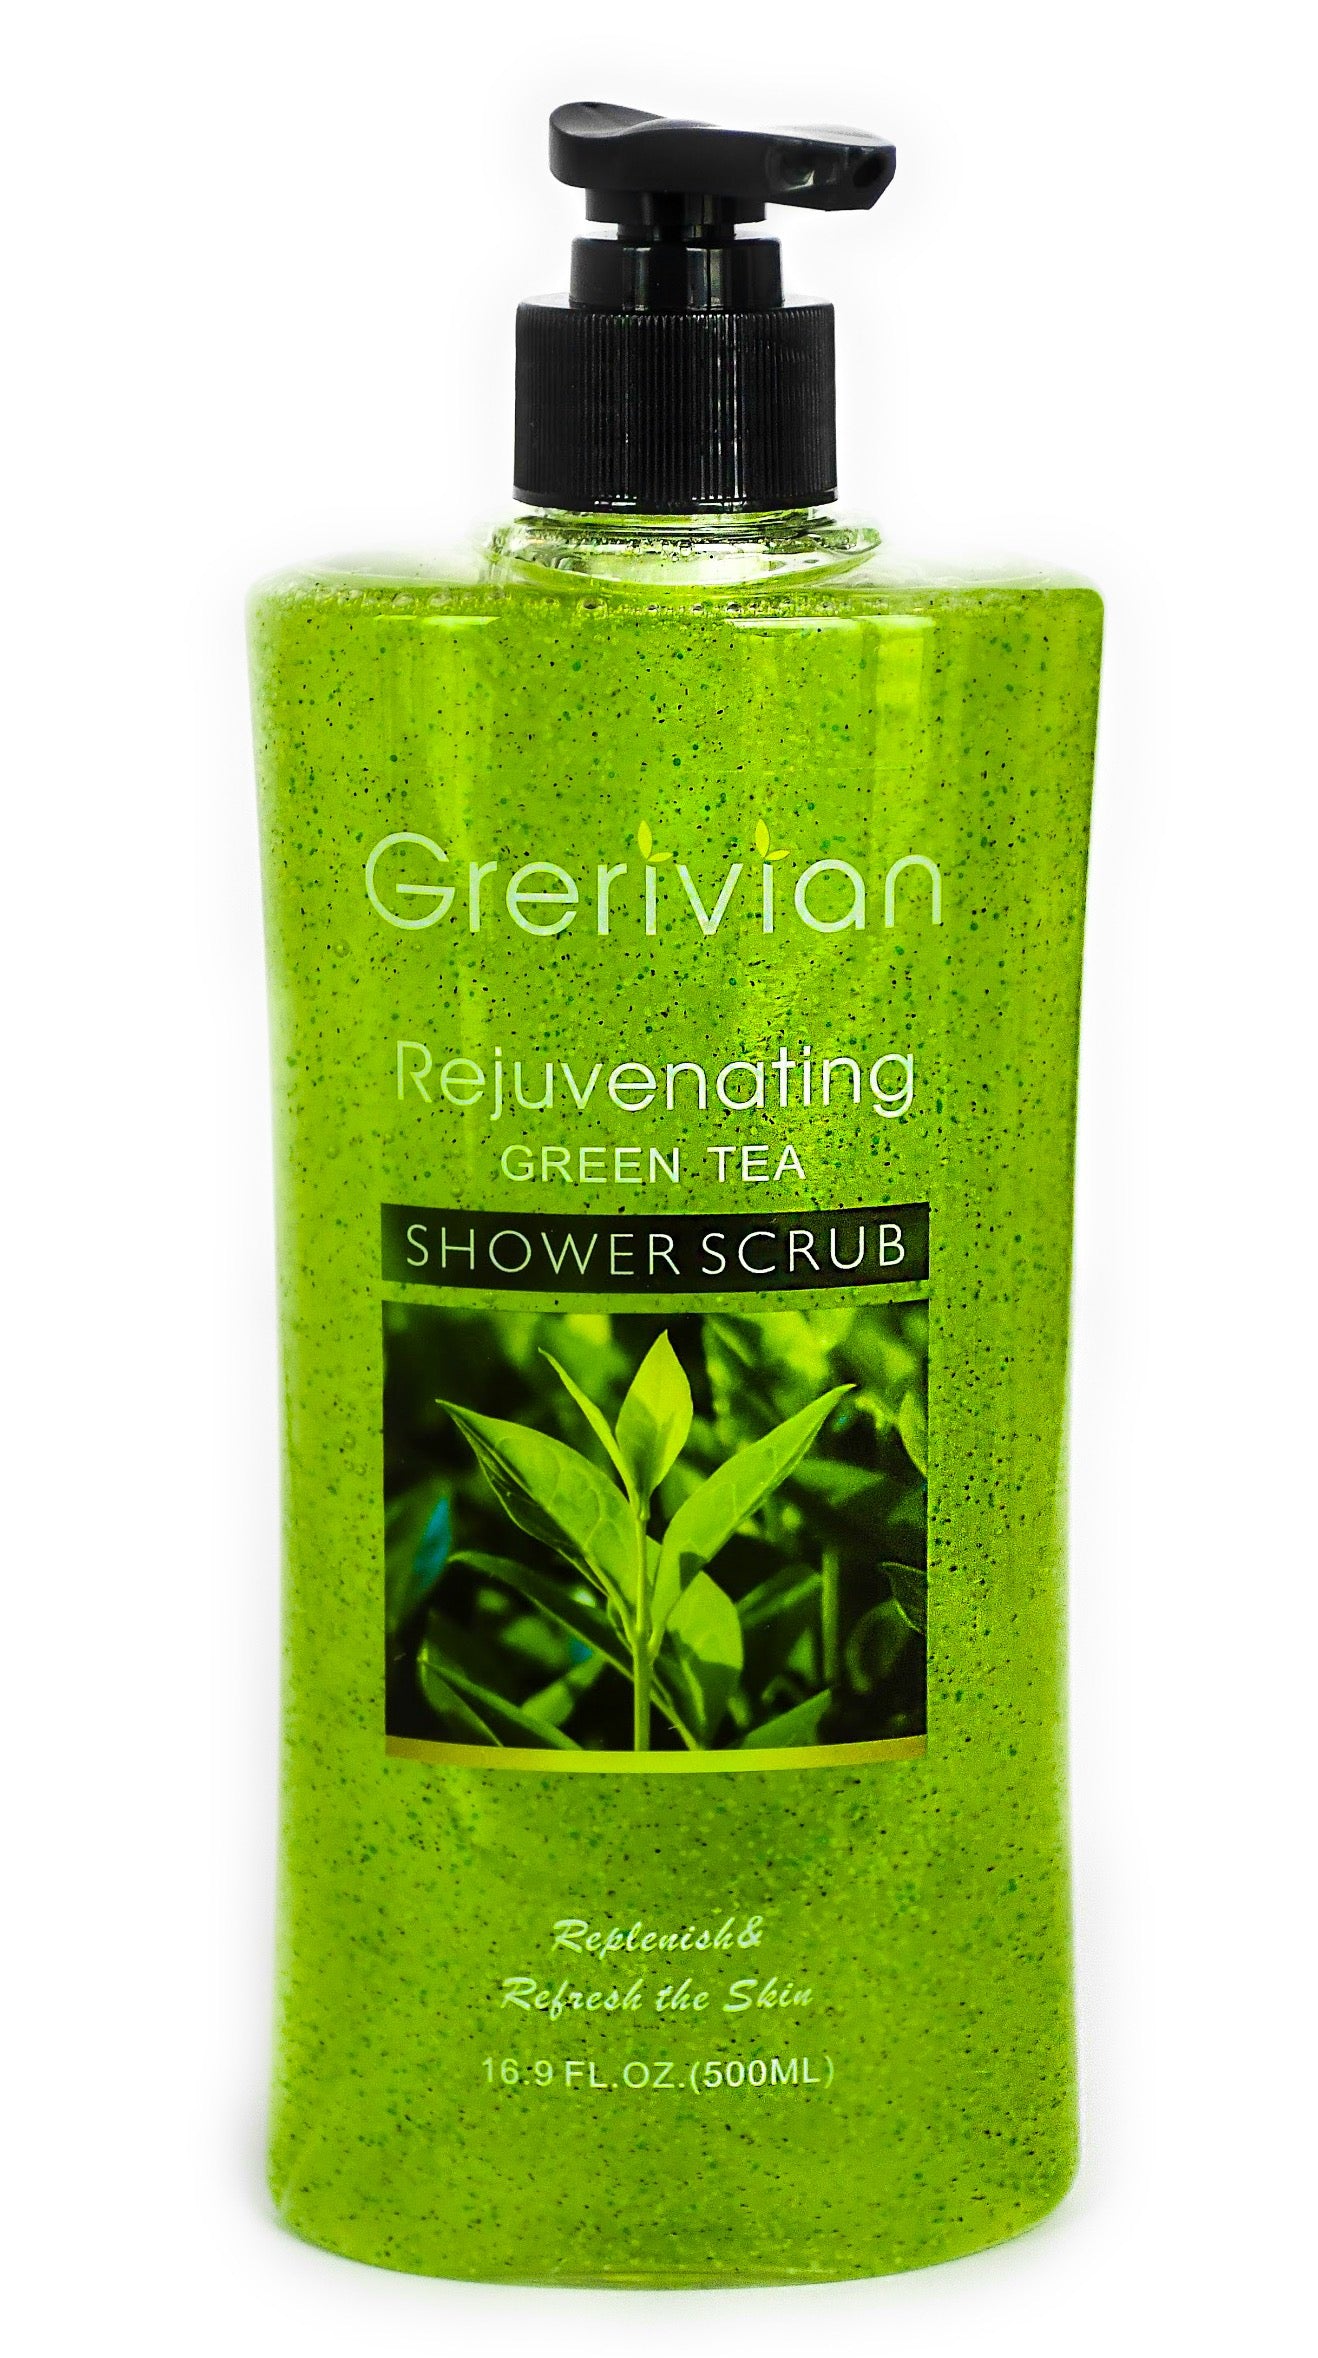 Grerivian GREEN TEA SHOWER SCRUB - Exfoliating, rejuvenating Body Wash - GRERIVIAN COSMETICS